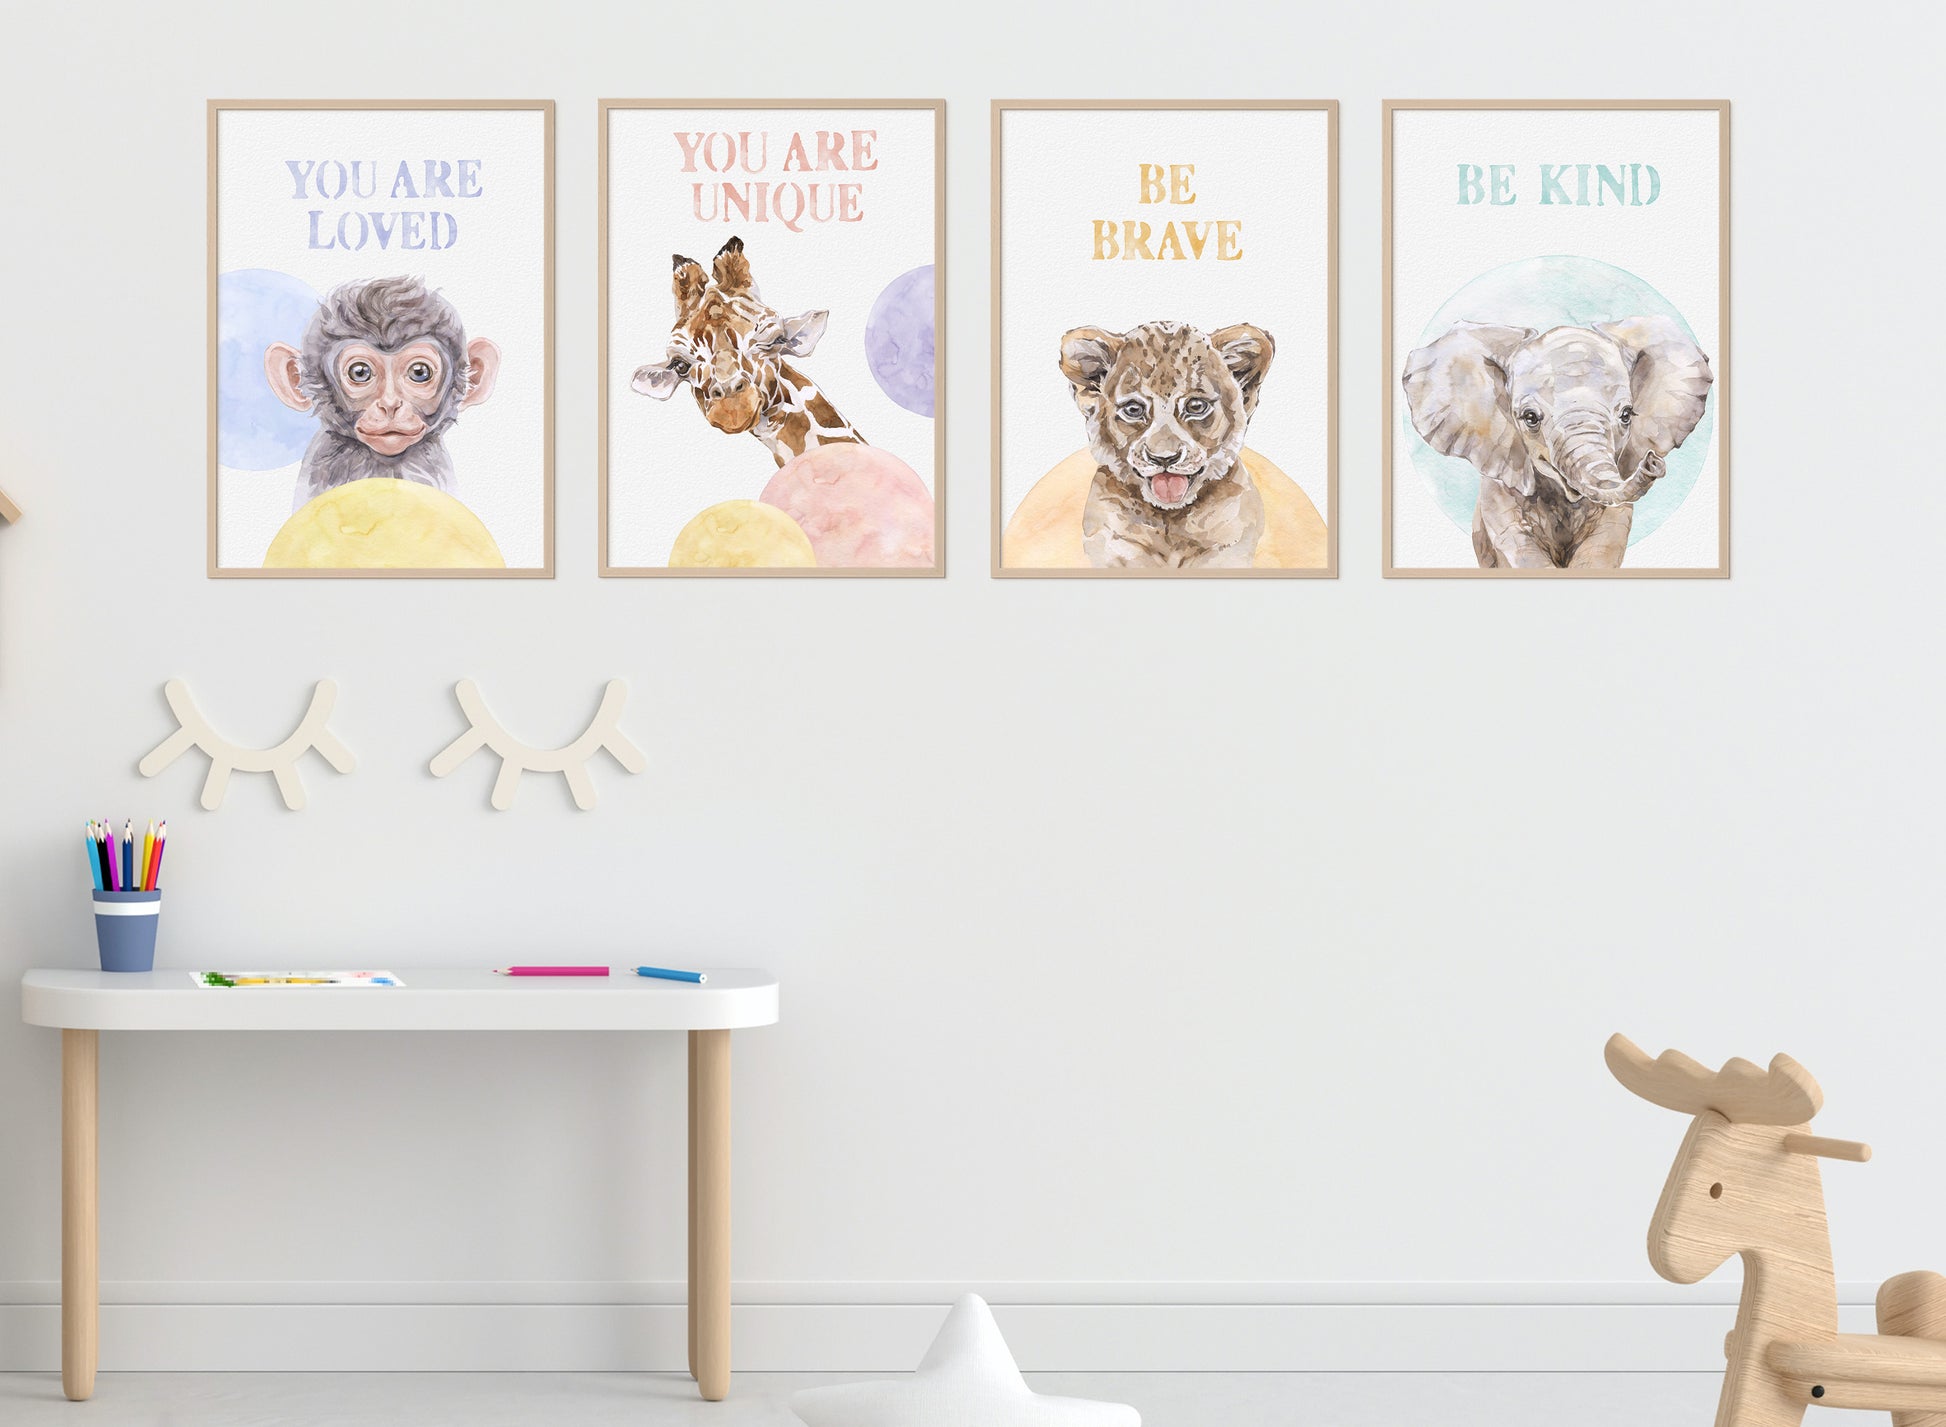 4 Poster Kinderzimmer • Deko • Baby Safari Tiere CreativeRobin •